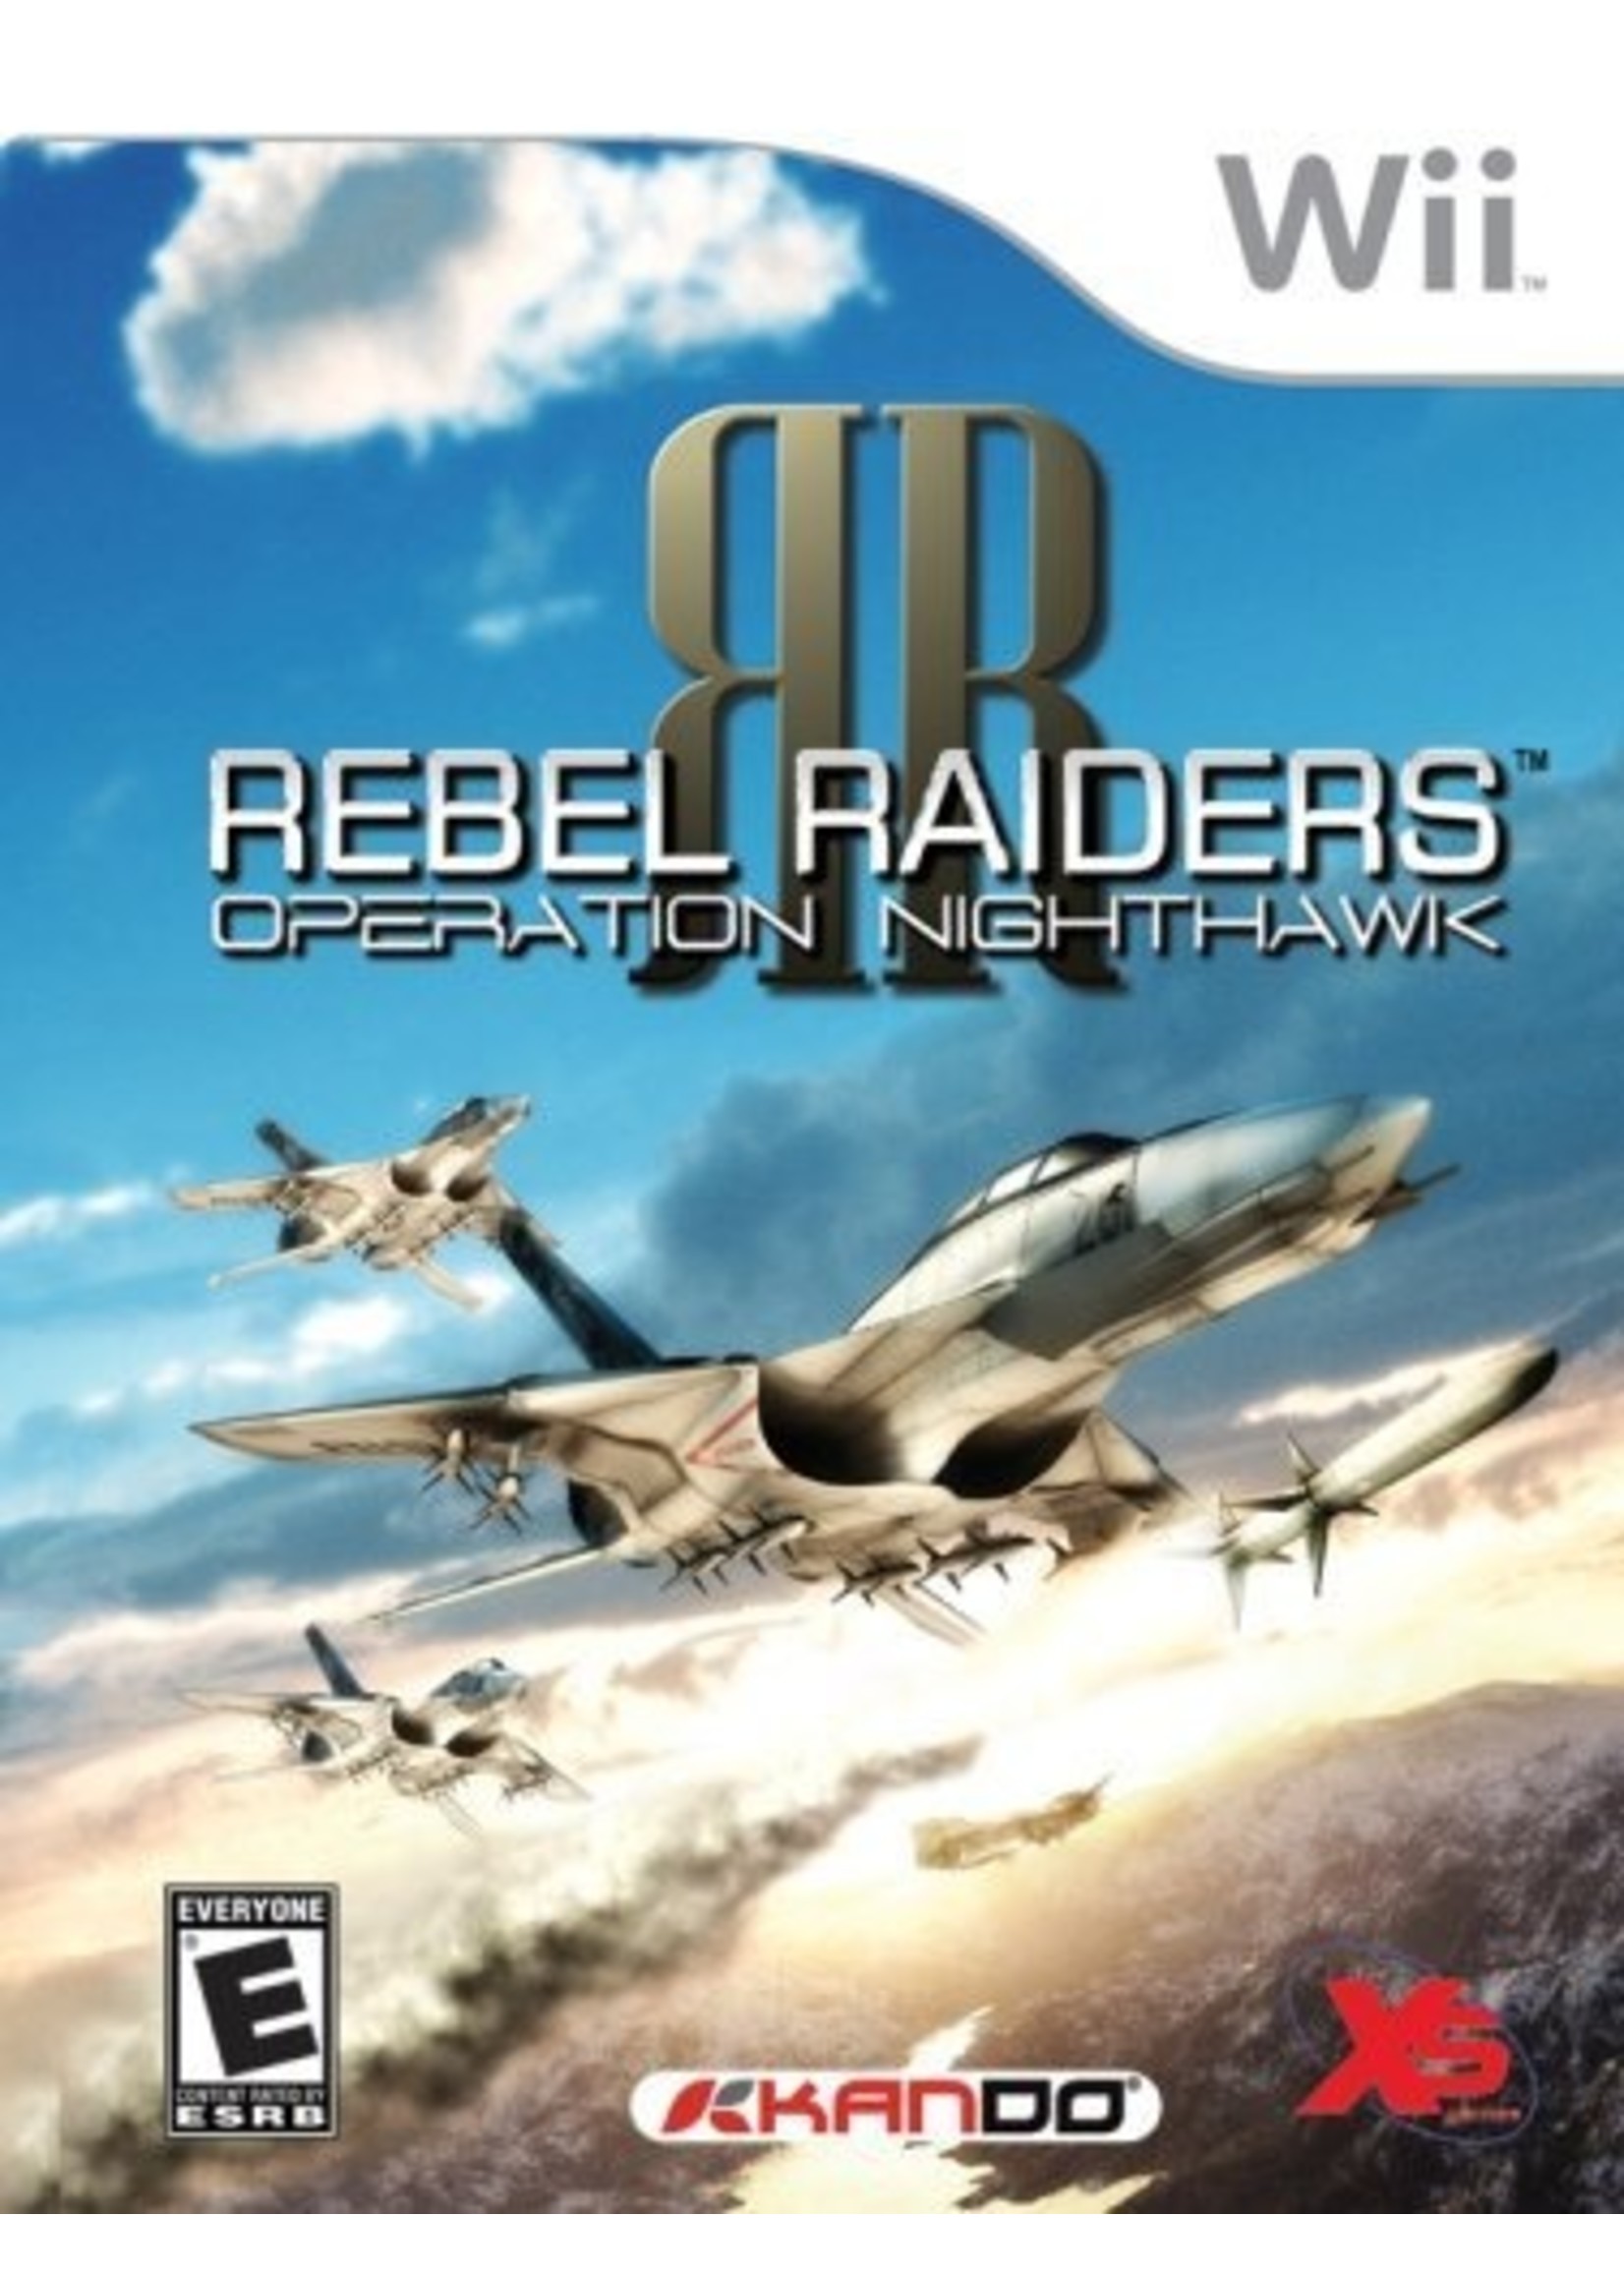 Nintendo Wii Rebel Raiders Operation Nighthawk